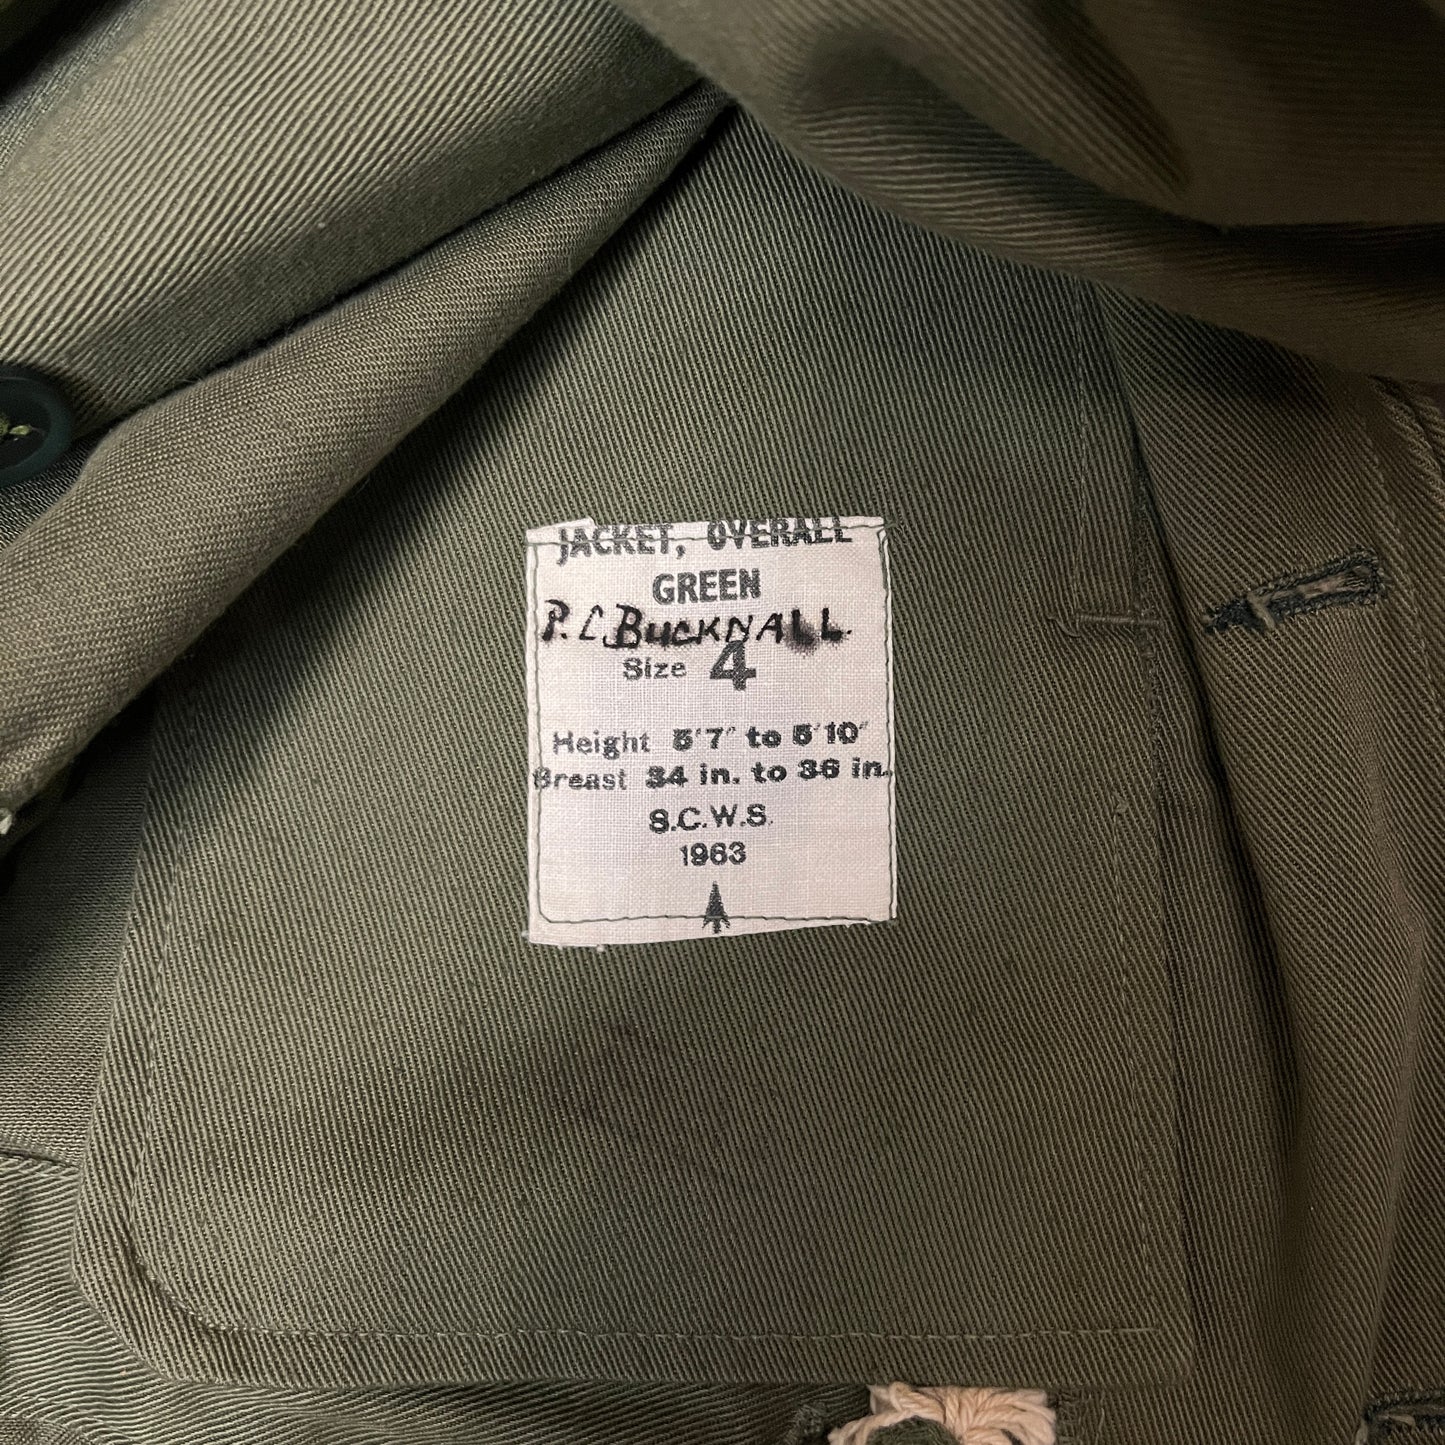 1964 British Army Overalll Jacket